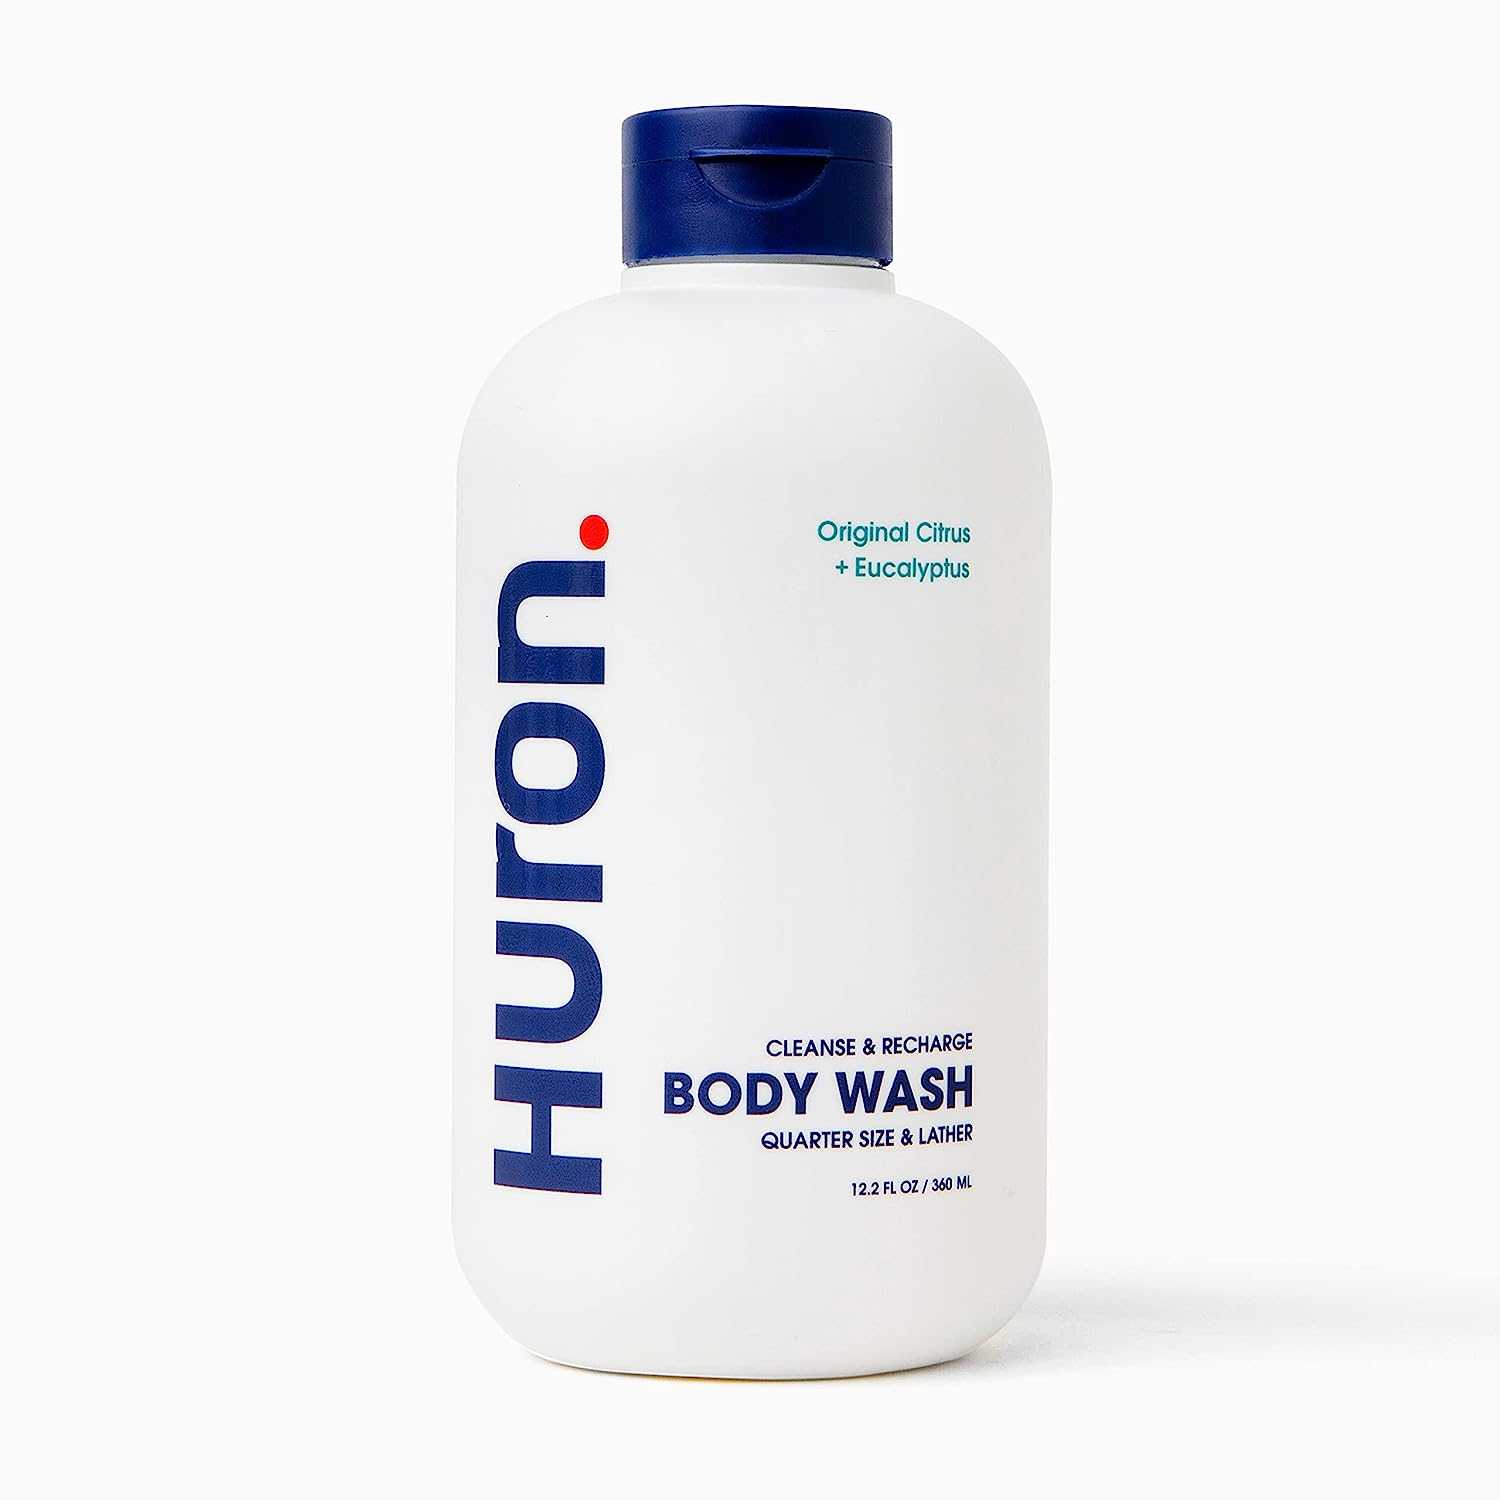 Huron Body Wash